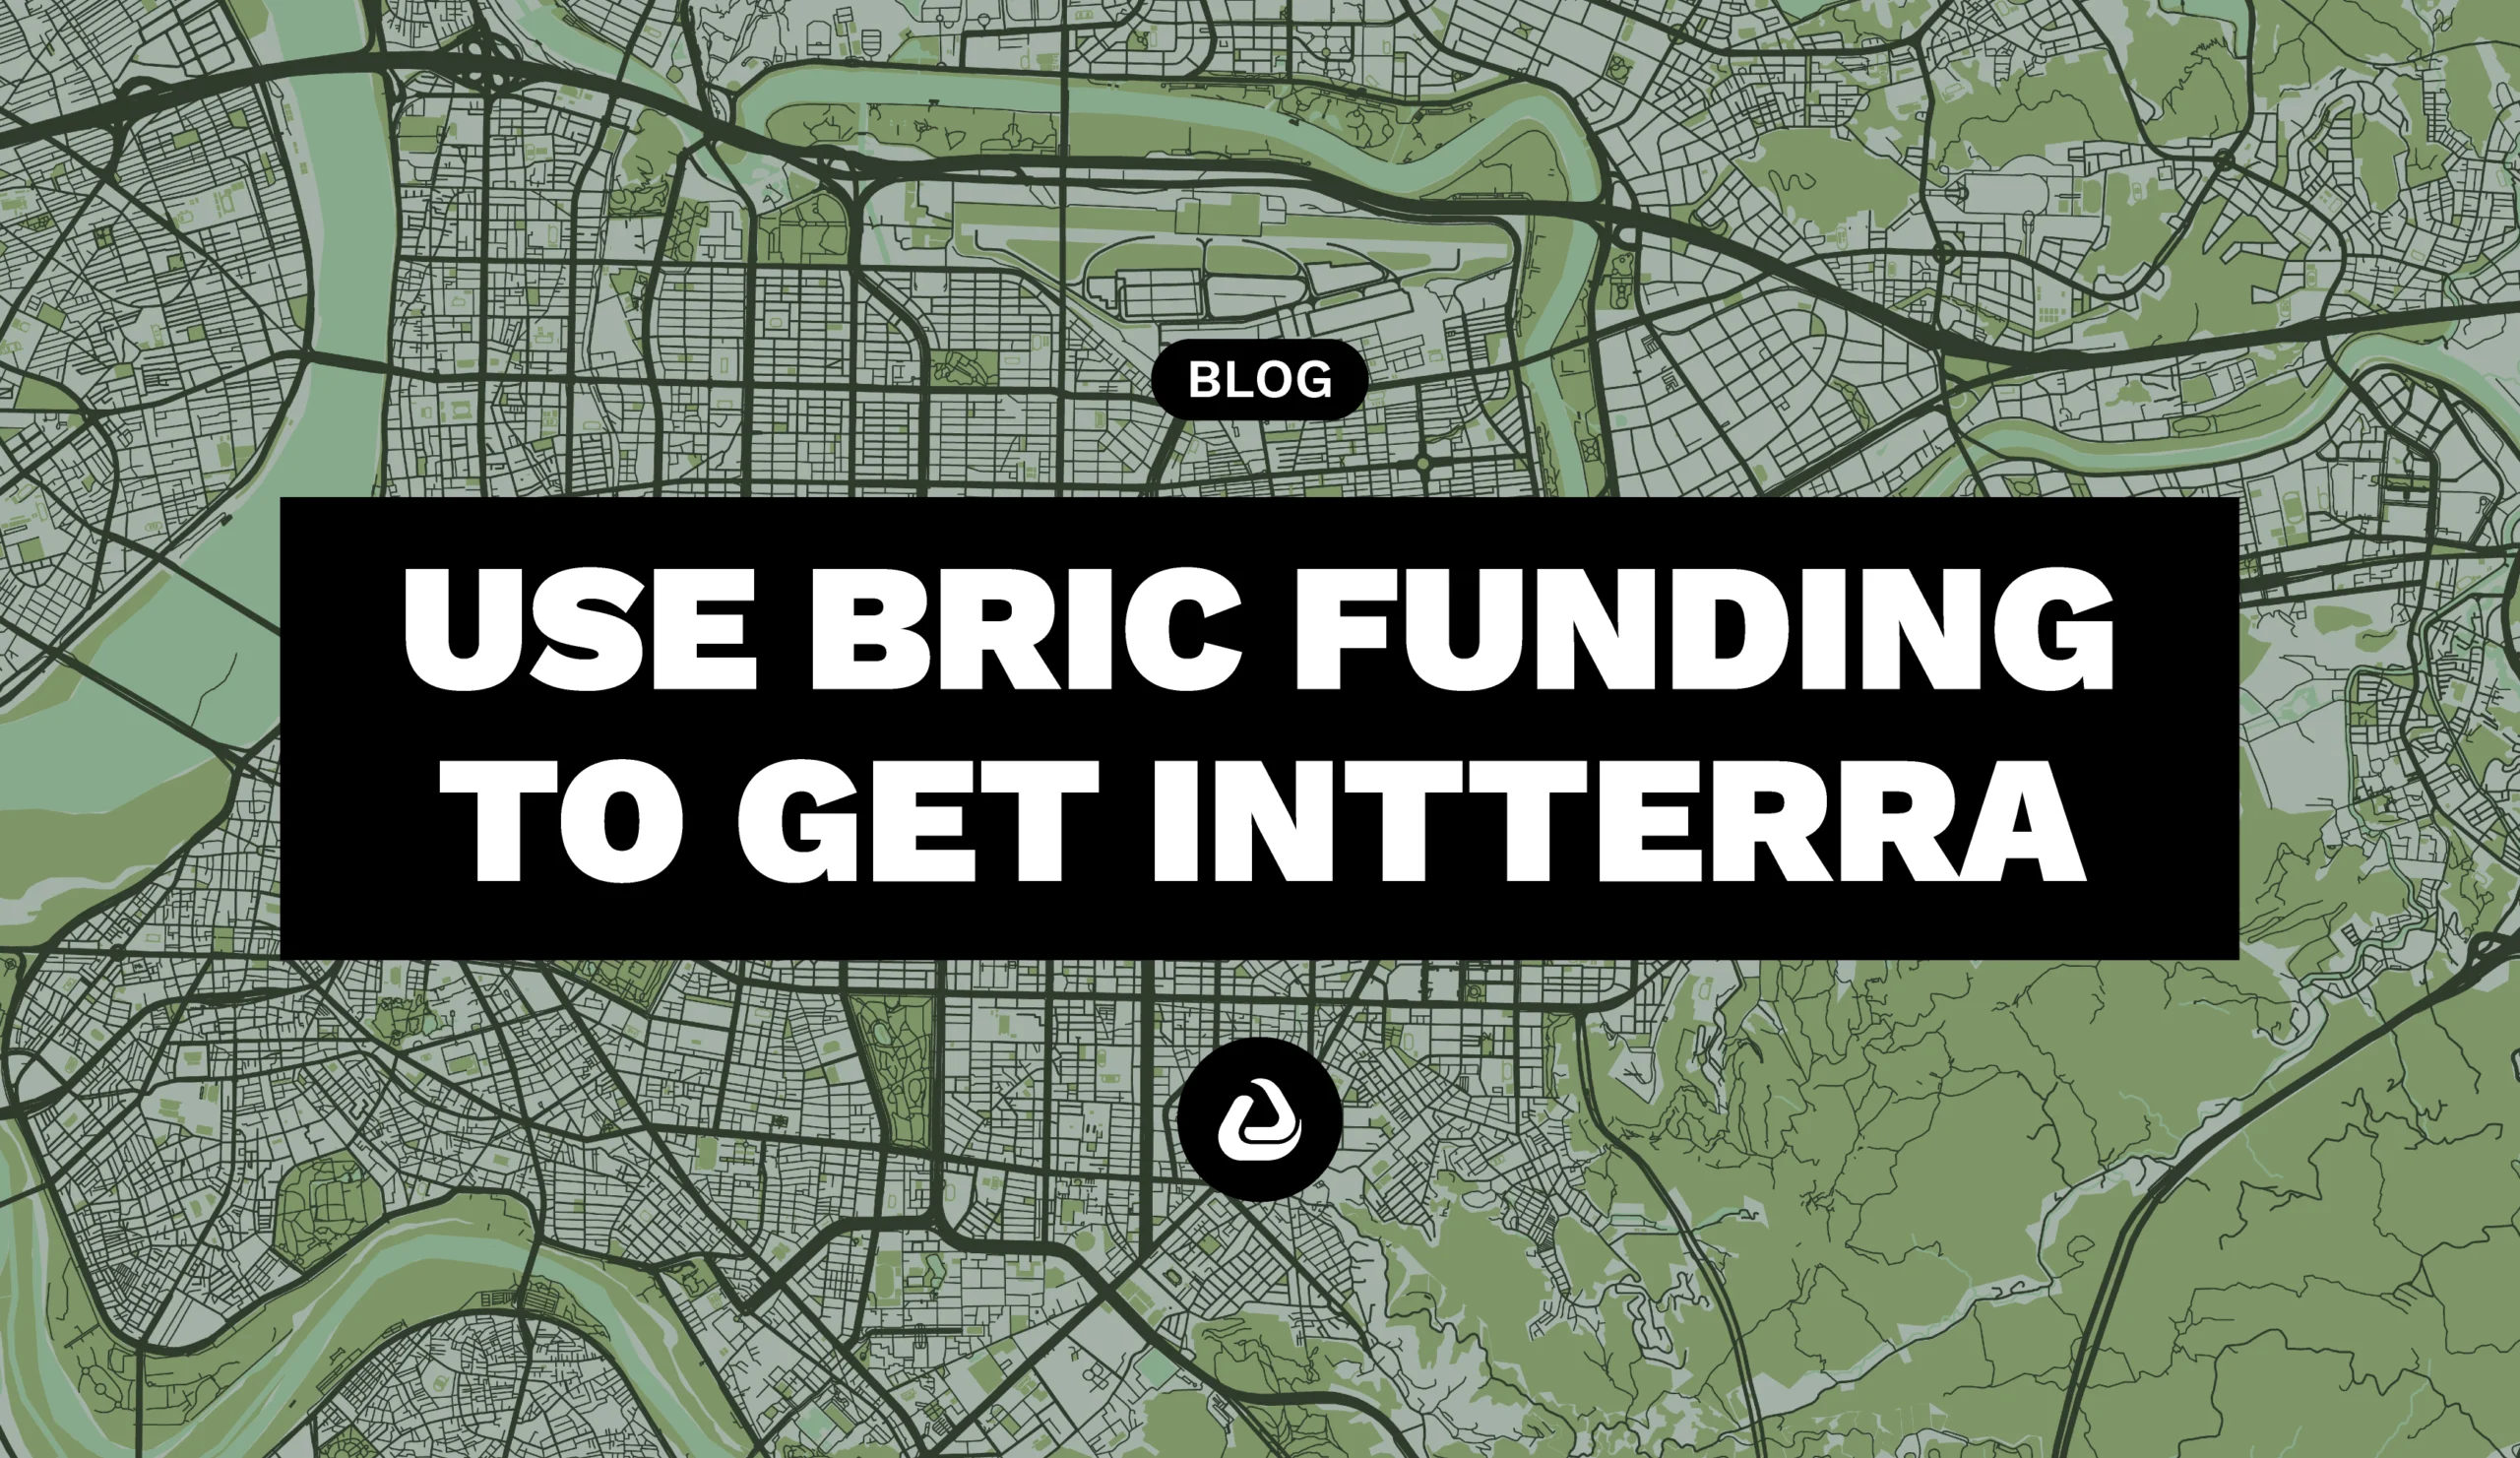 BRIC grant funding